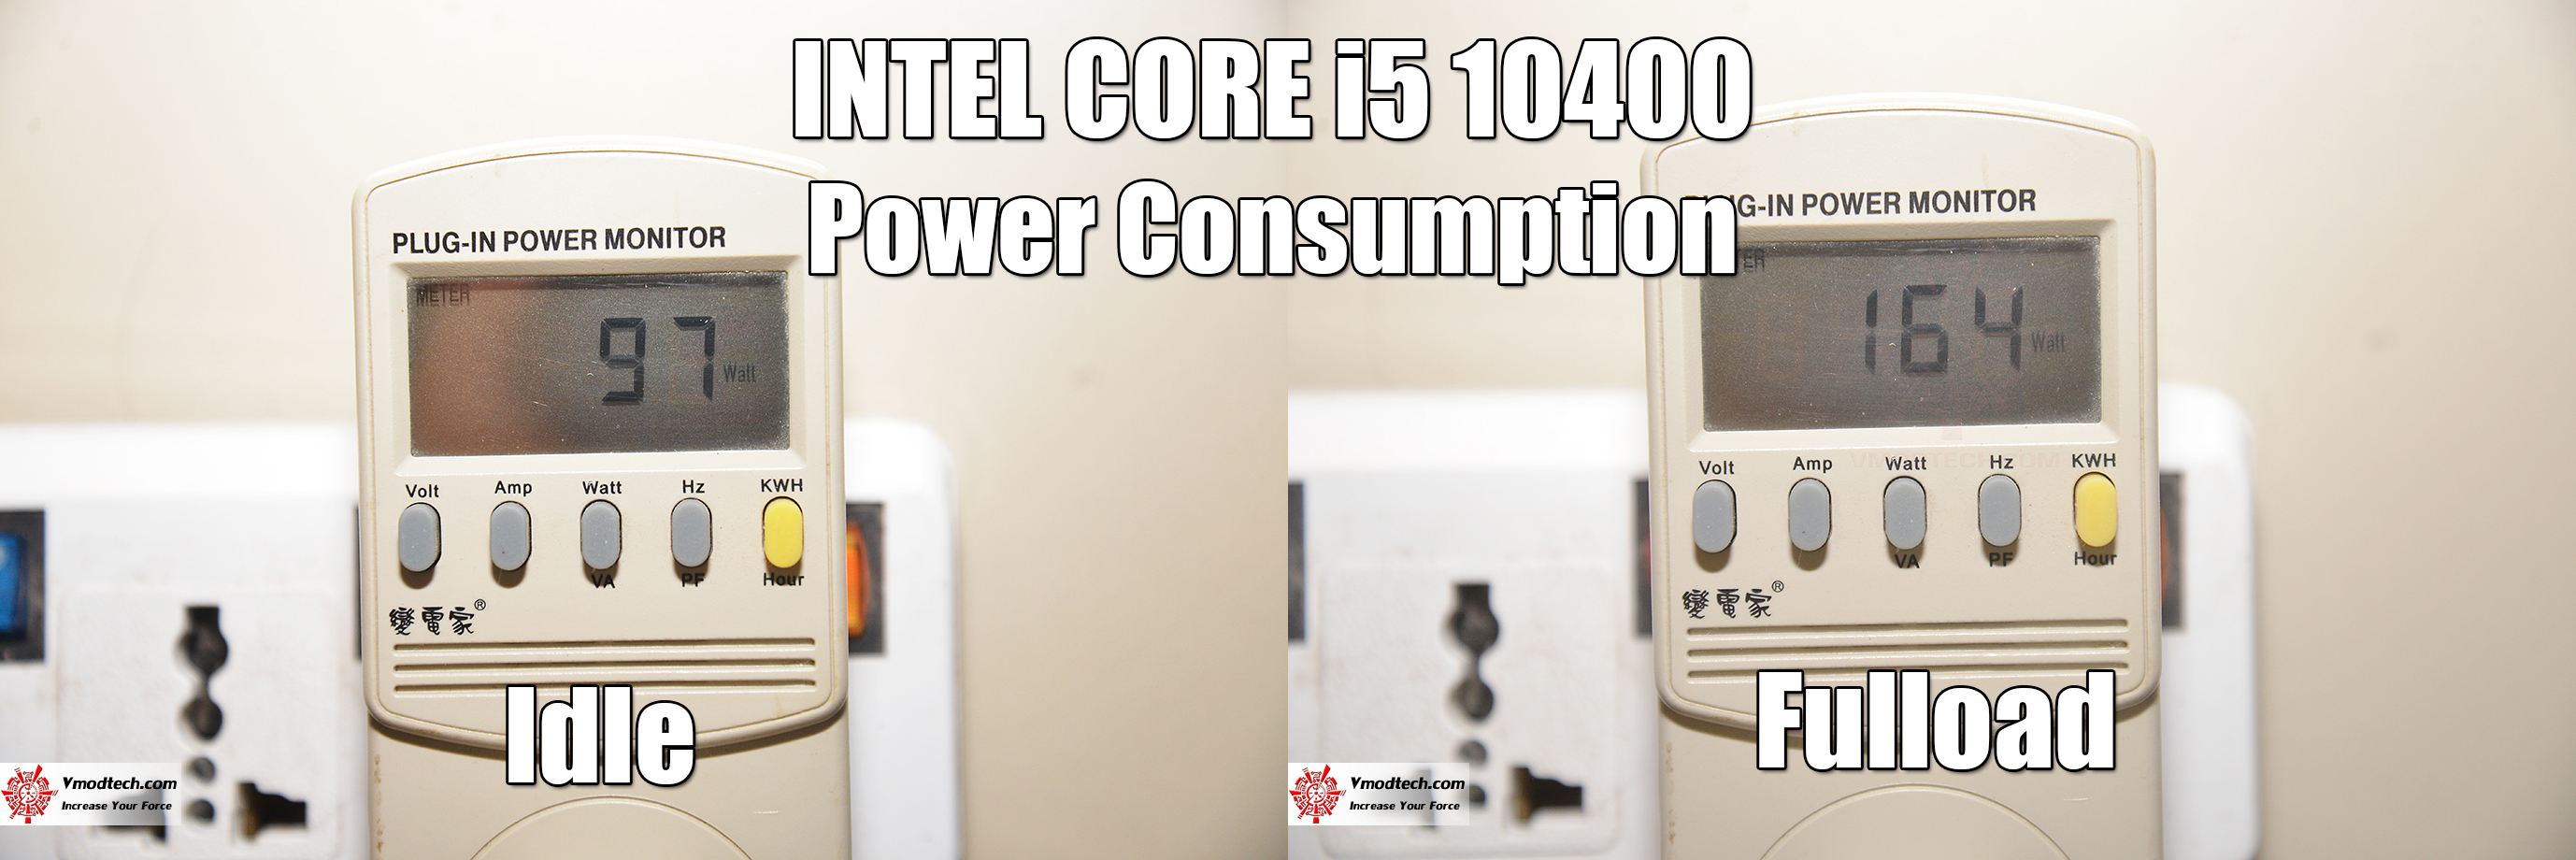 power1 INTEL CORE i5 10400 PROCESSOR REVIEW